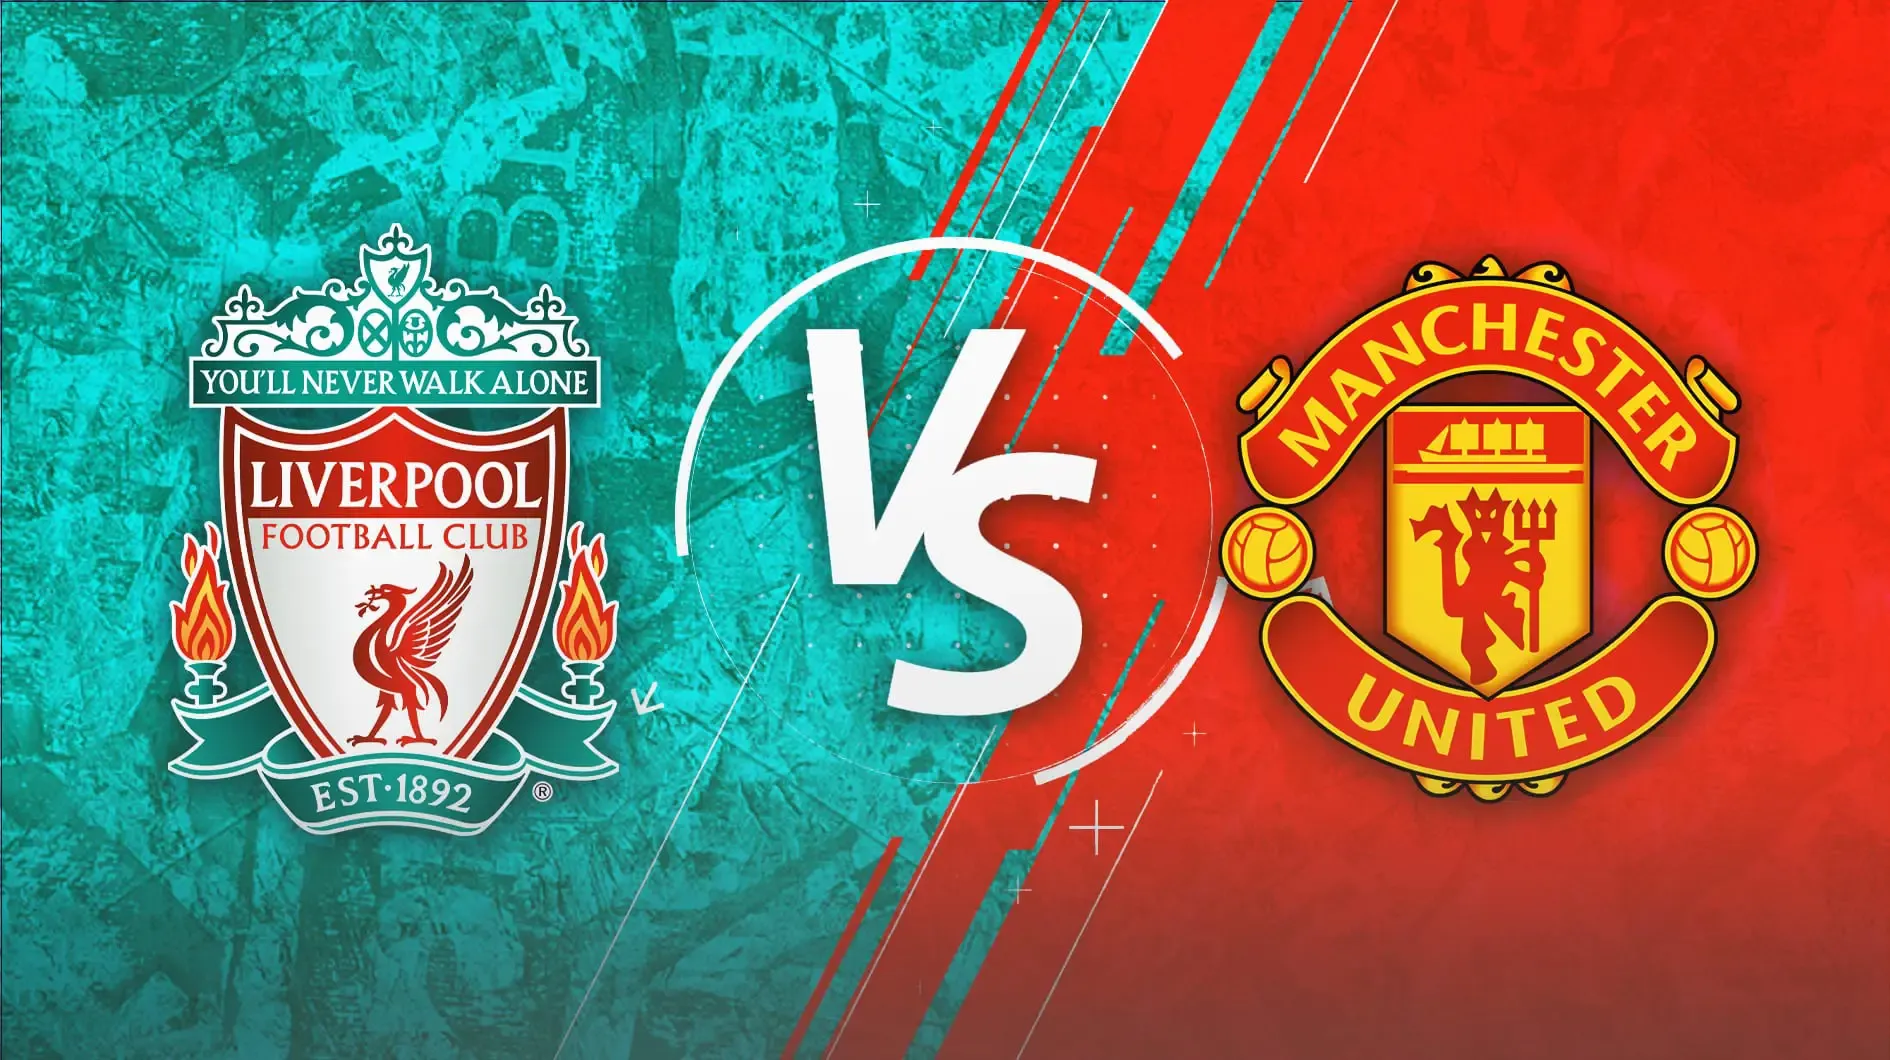 Liverpool vs Manchester United live on hesgoal